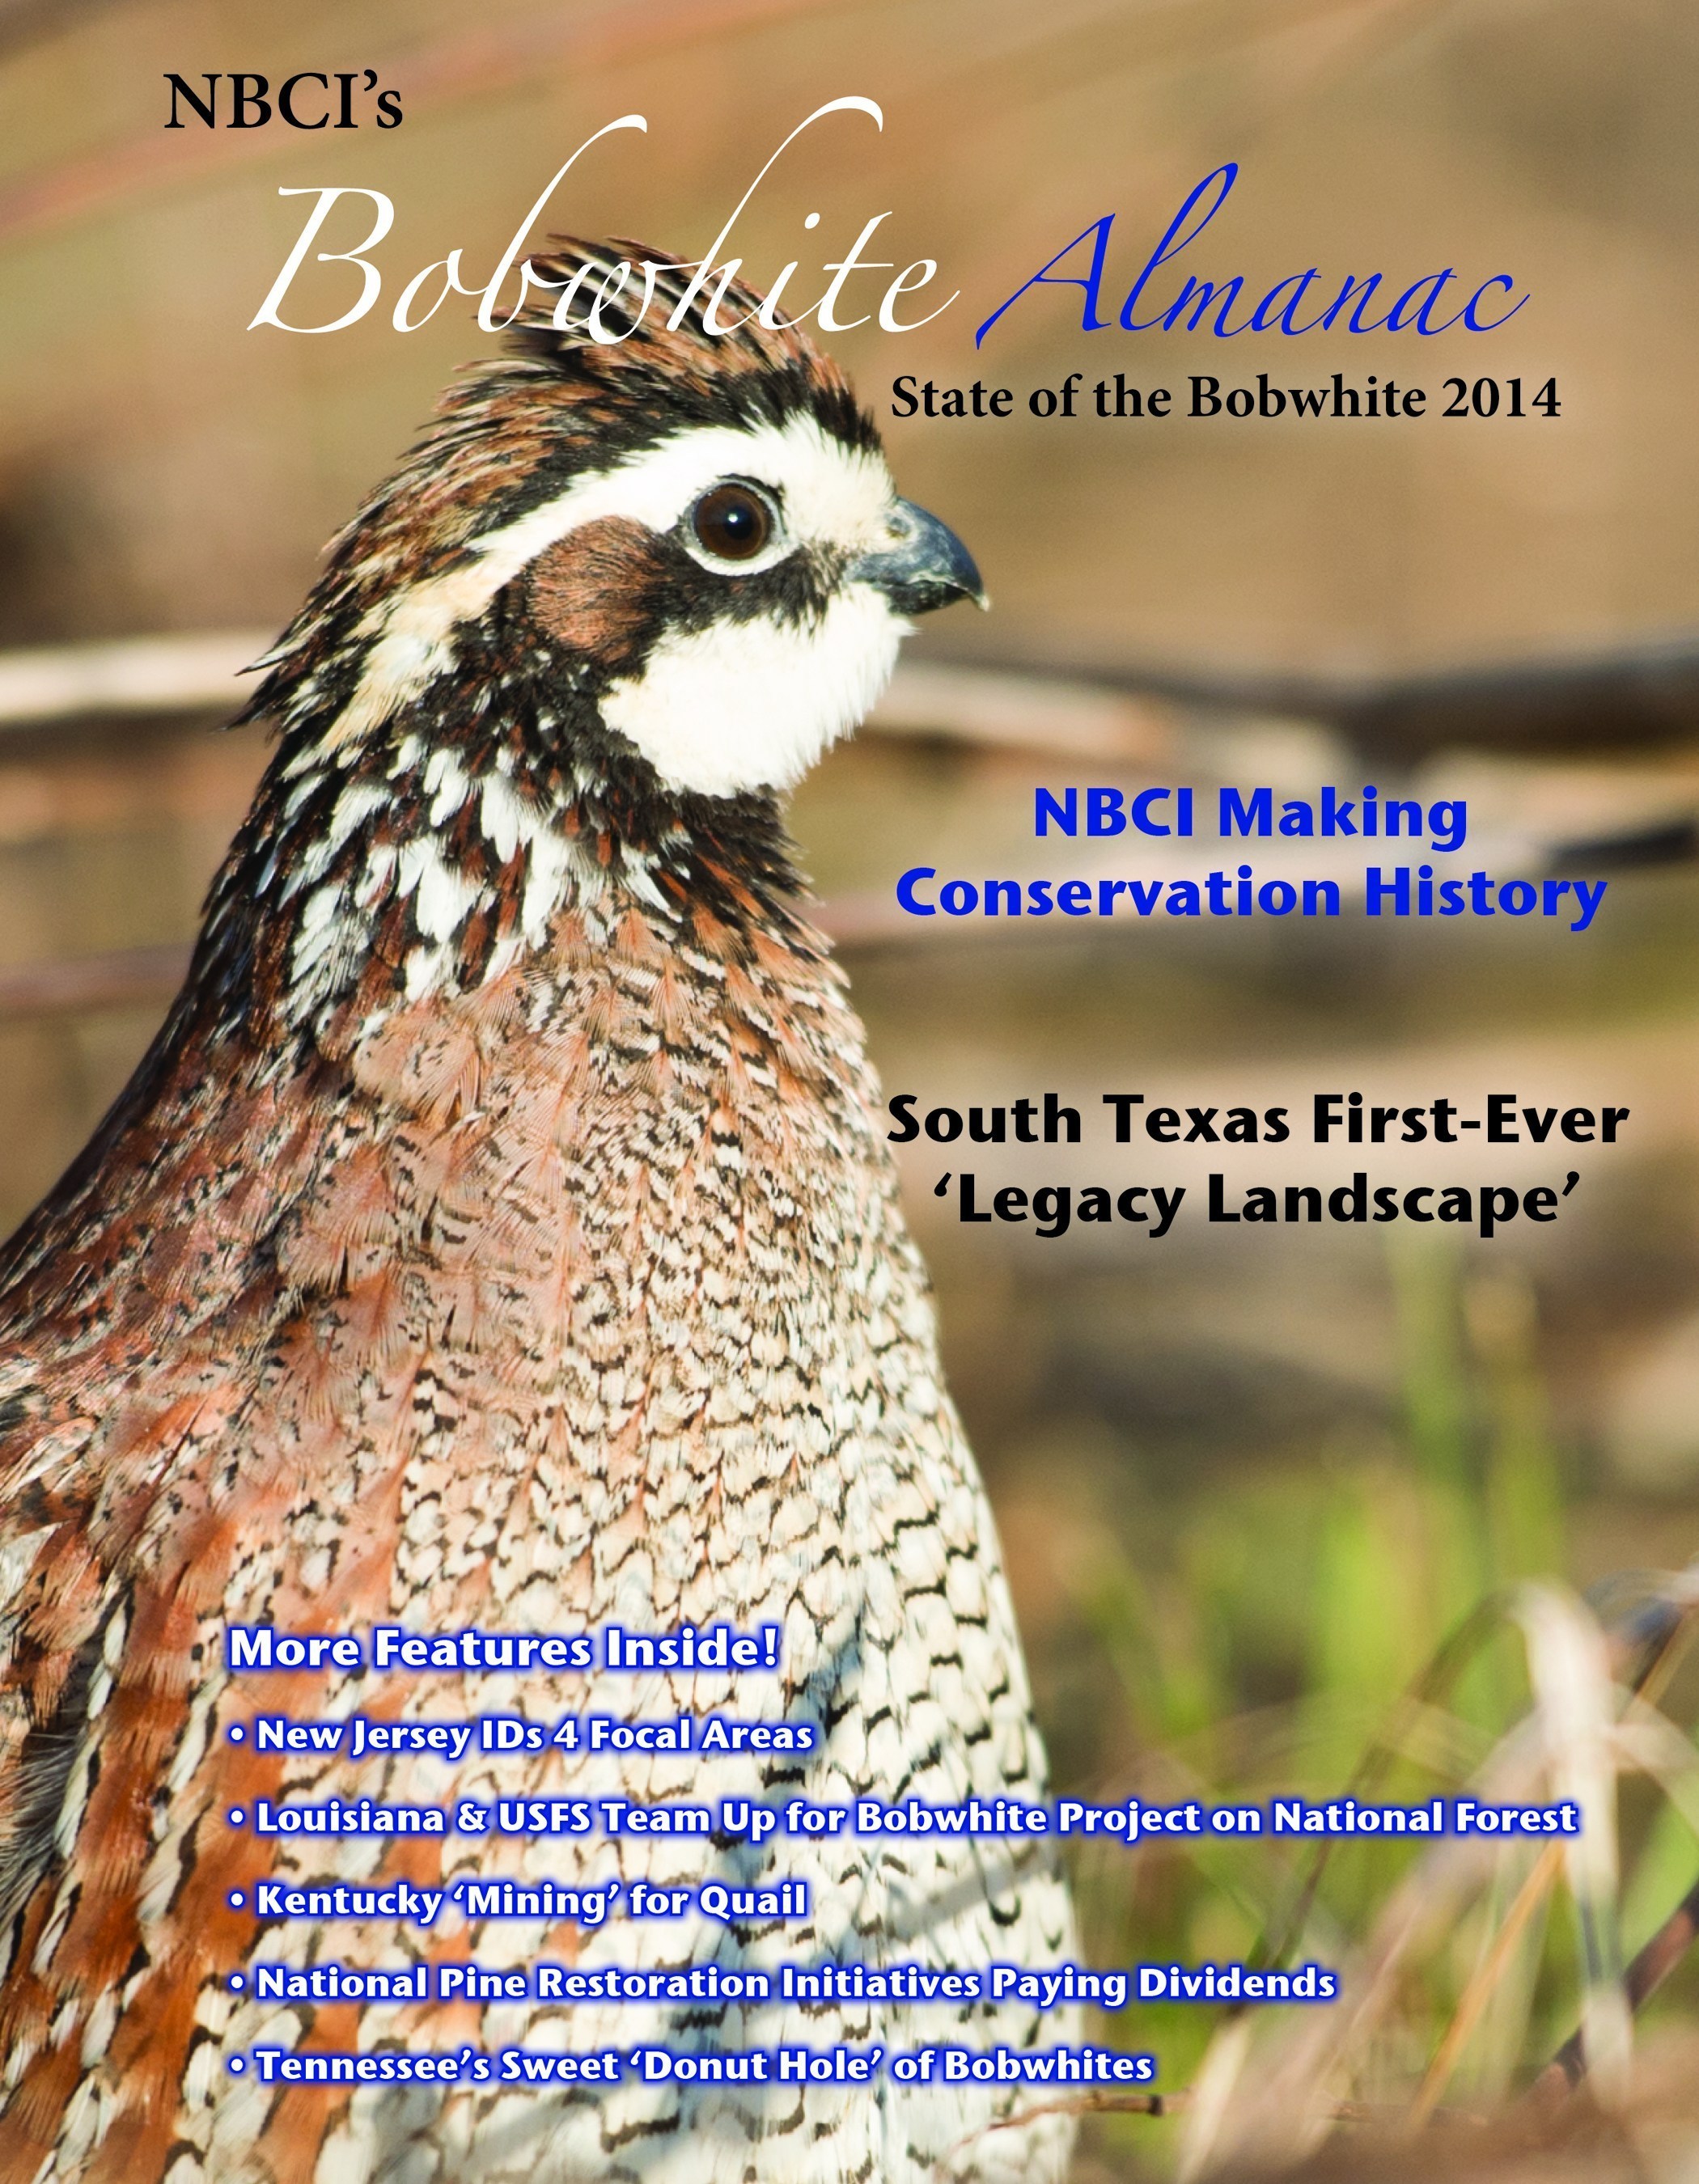 NBCI's Bobwhite Almanac, State of the Bobwhite 2014 gives a snapshot view of bobwhite conservation.